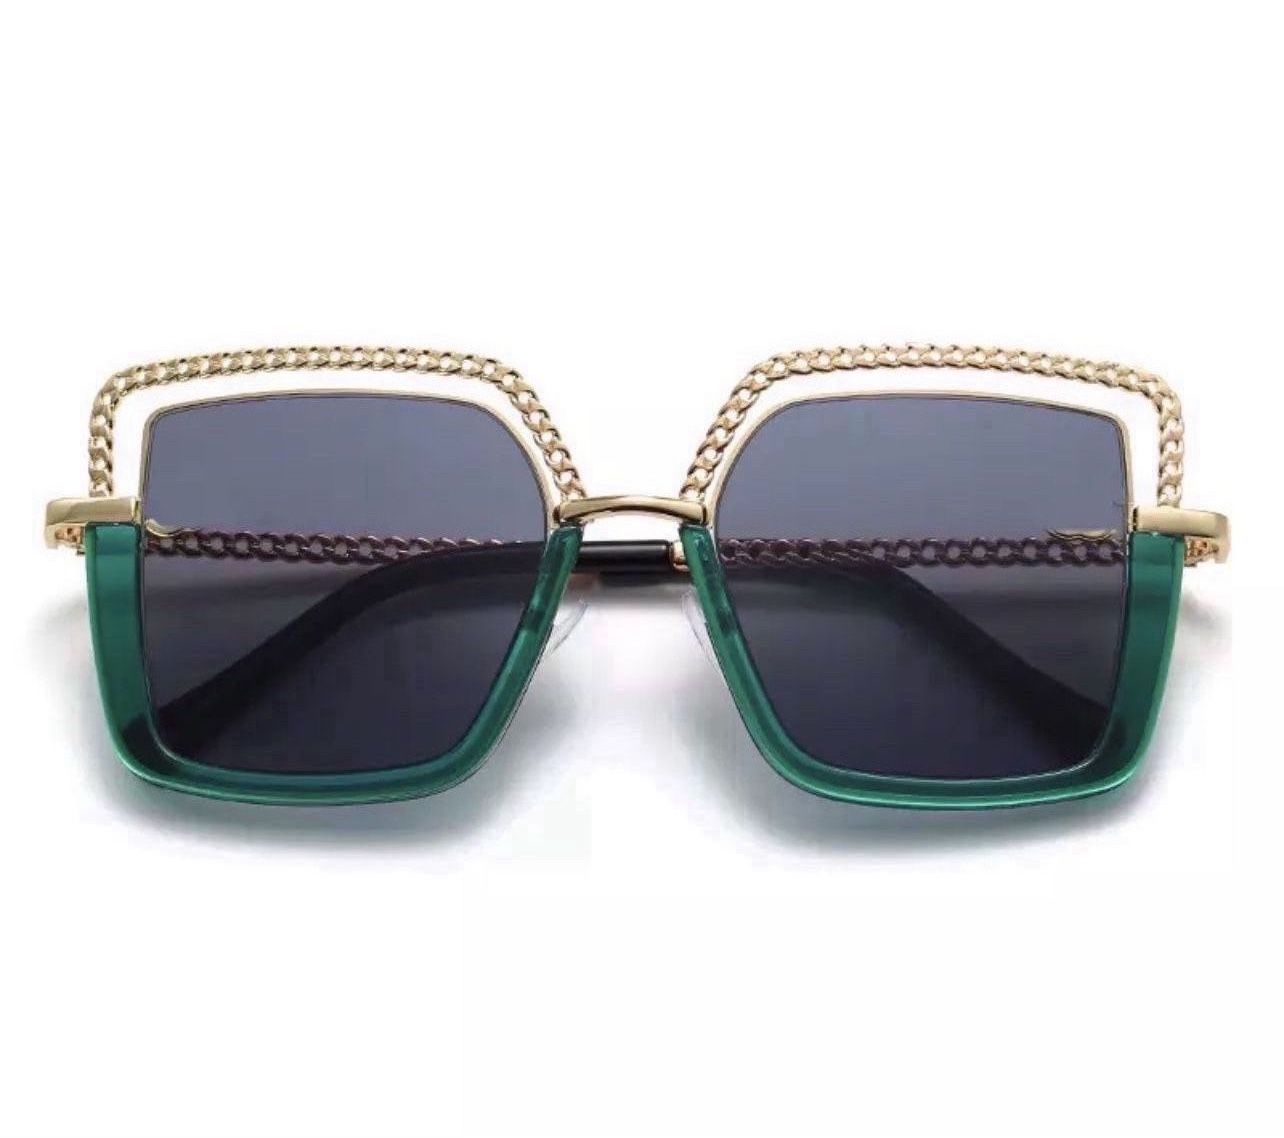 Chanel CC Logo Sunglasses 4095-B Swarovski Crystals for Sale in Miramar, FL  - OfferUp